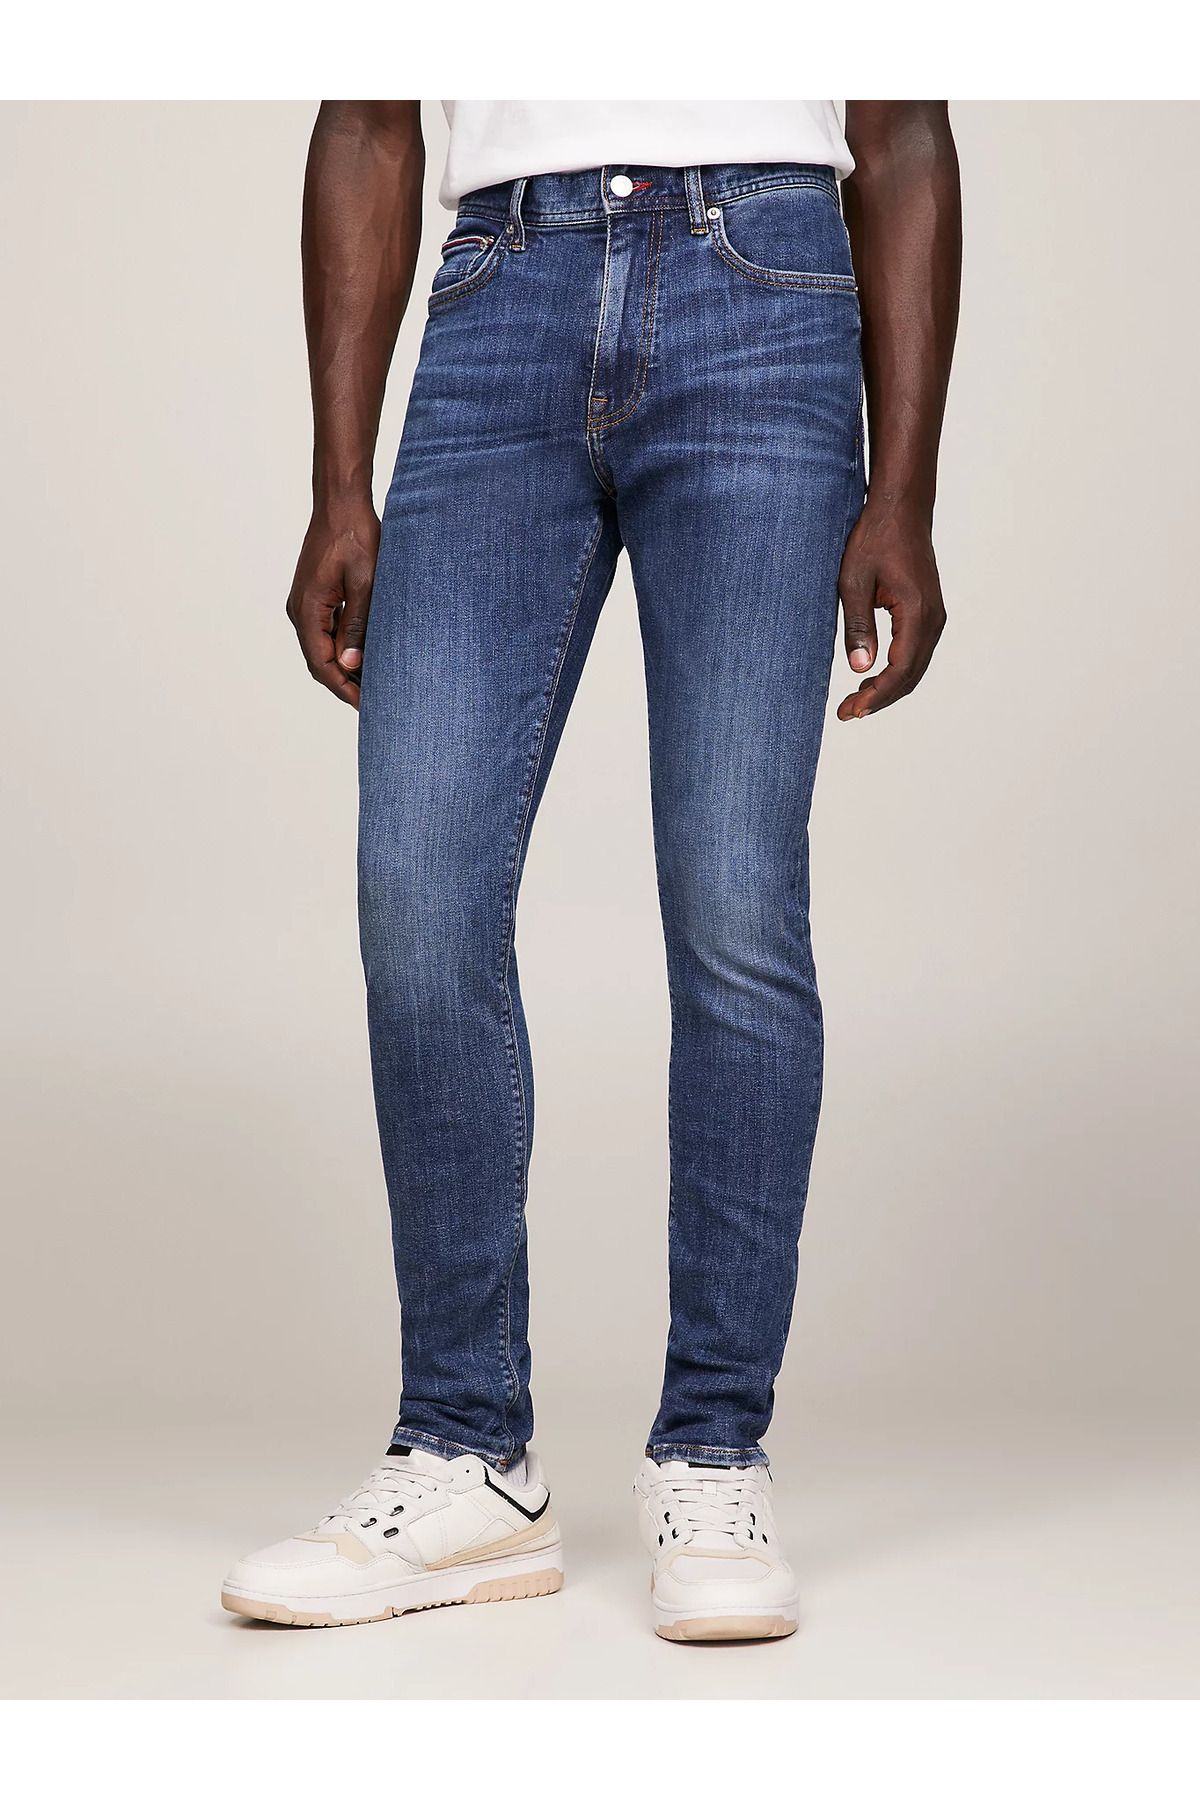 Tommy Hilfiger Erkek Denim Normal Belli Düz Model Günlük Kullanım Mavi1 Jeans MW0MW33968-1BC